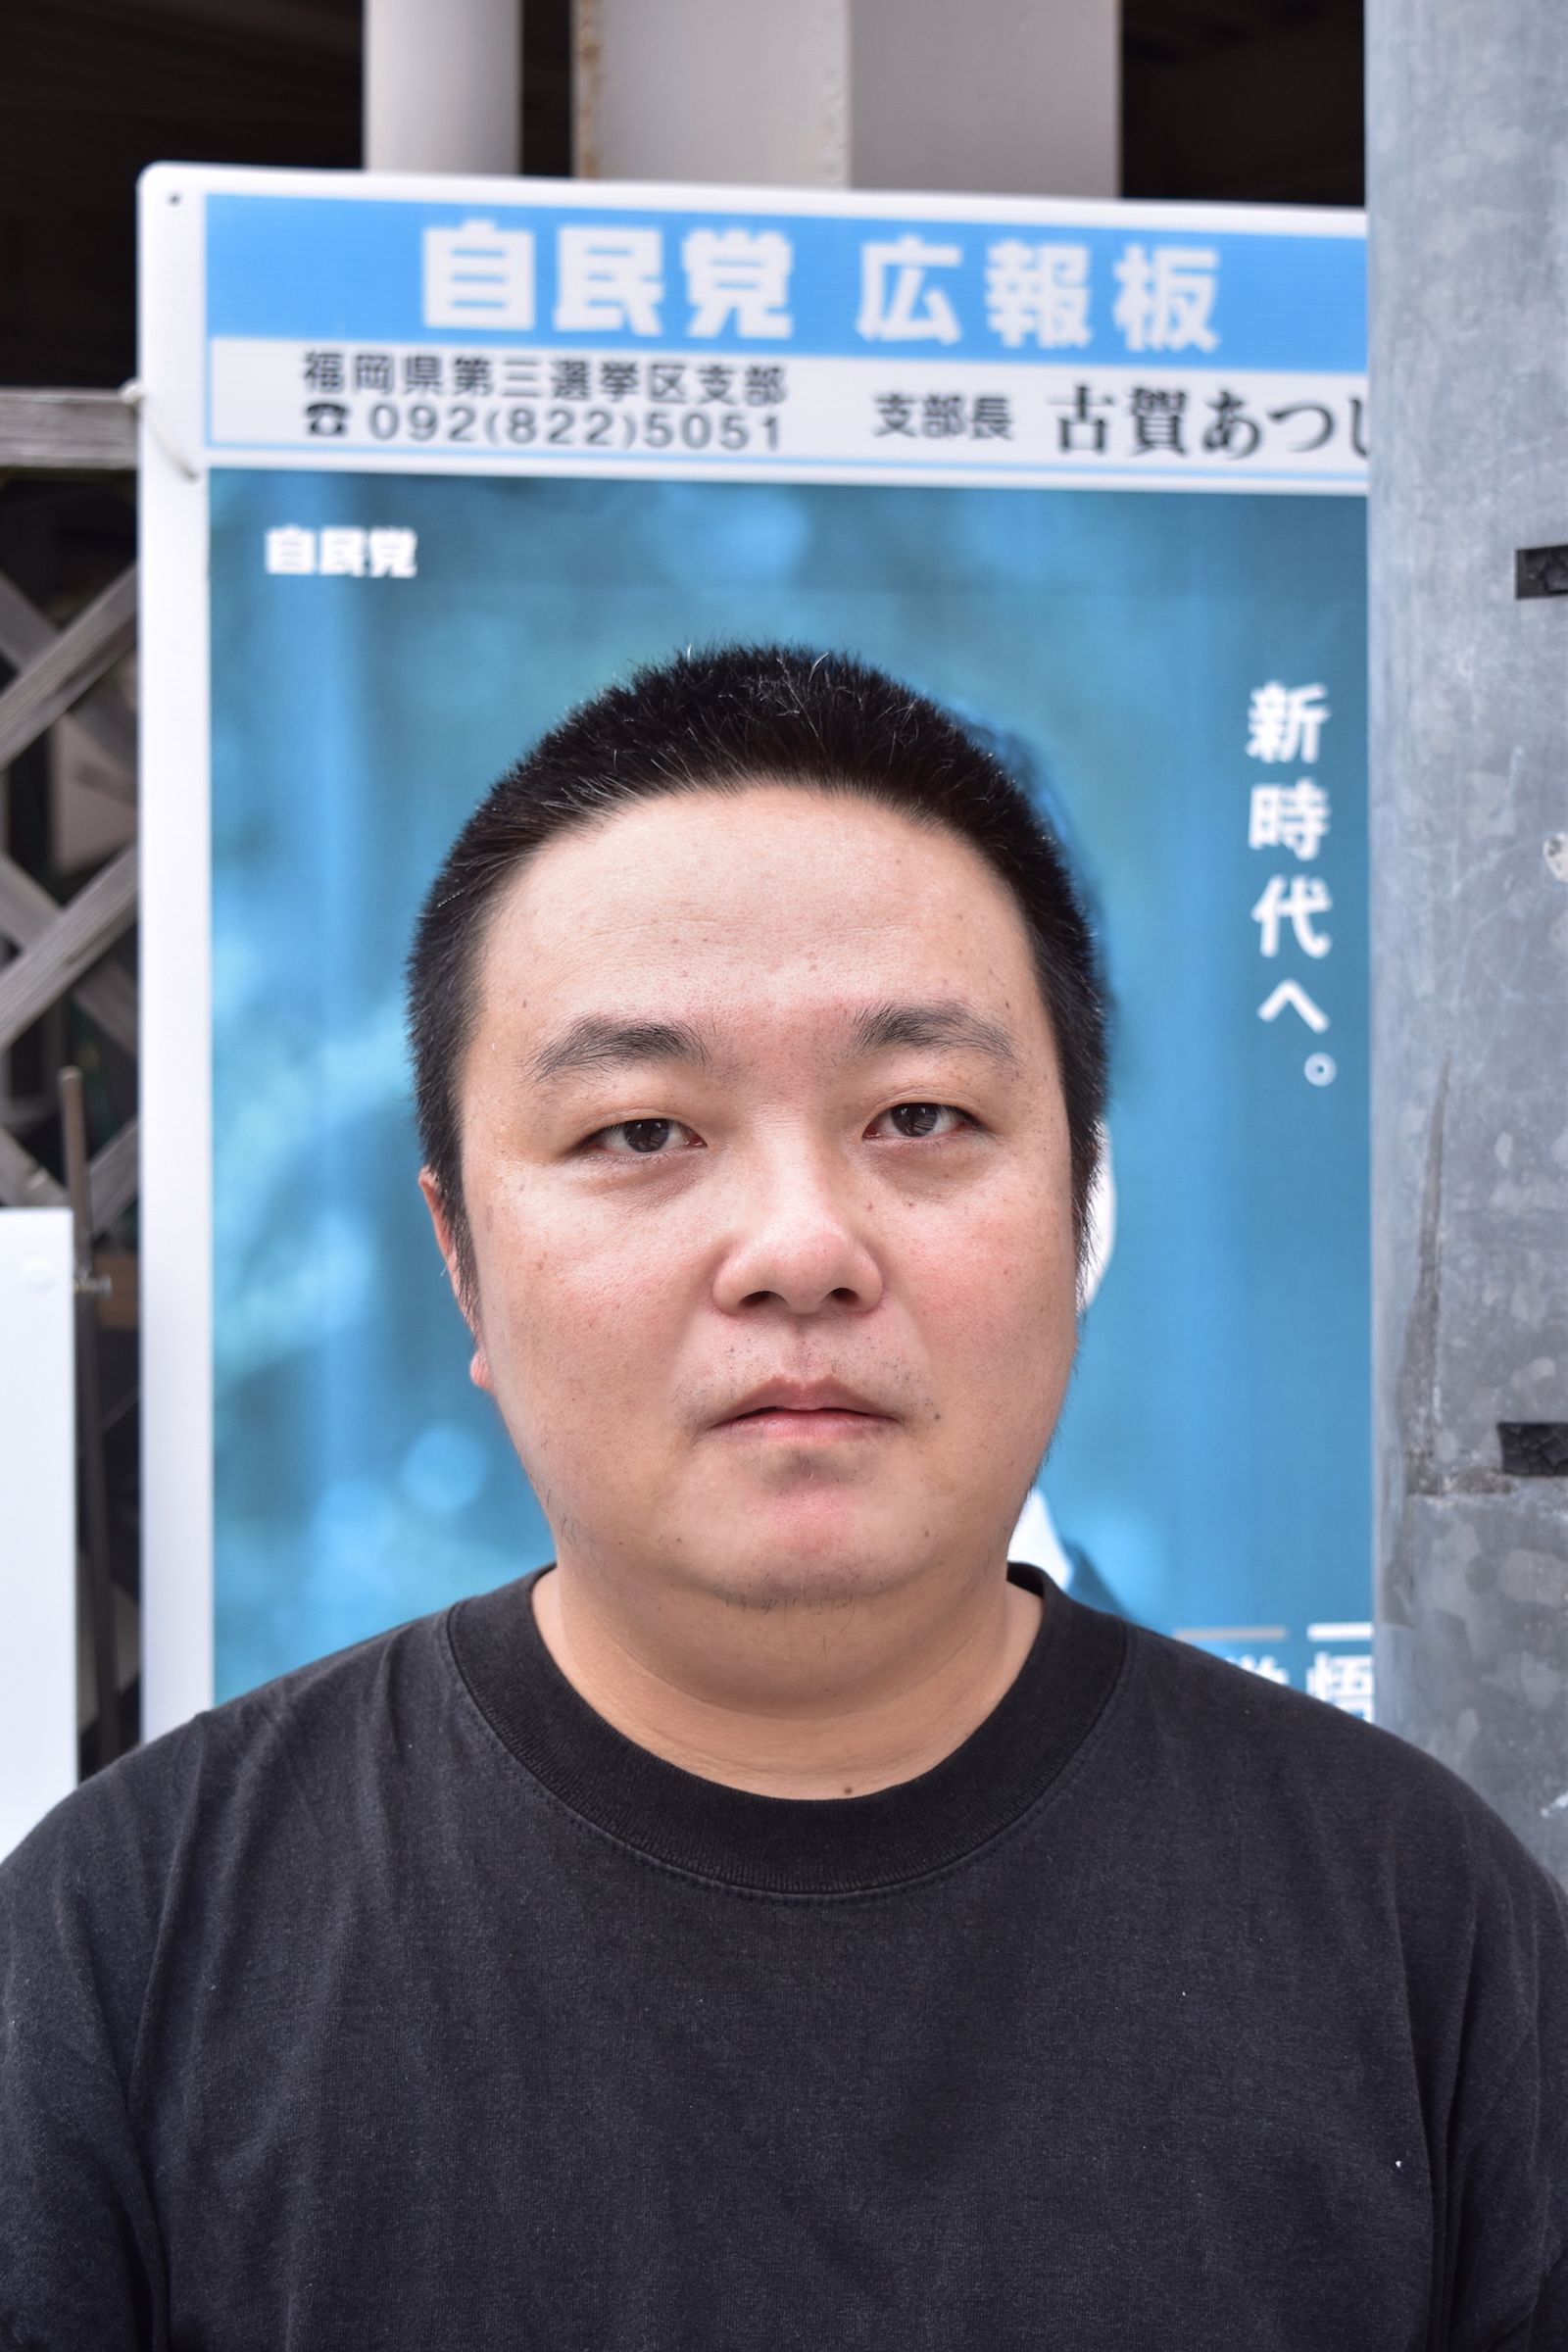 © Inokuchi Masashi - Probaganda Hero Standing in front of political advertising poster, asserting message